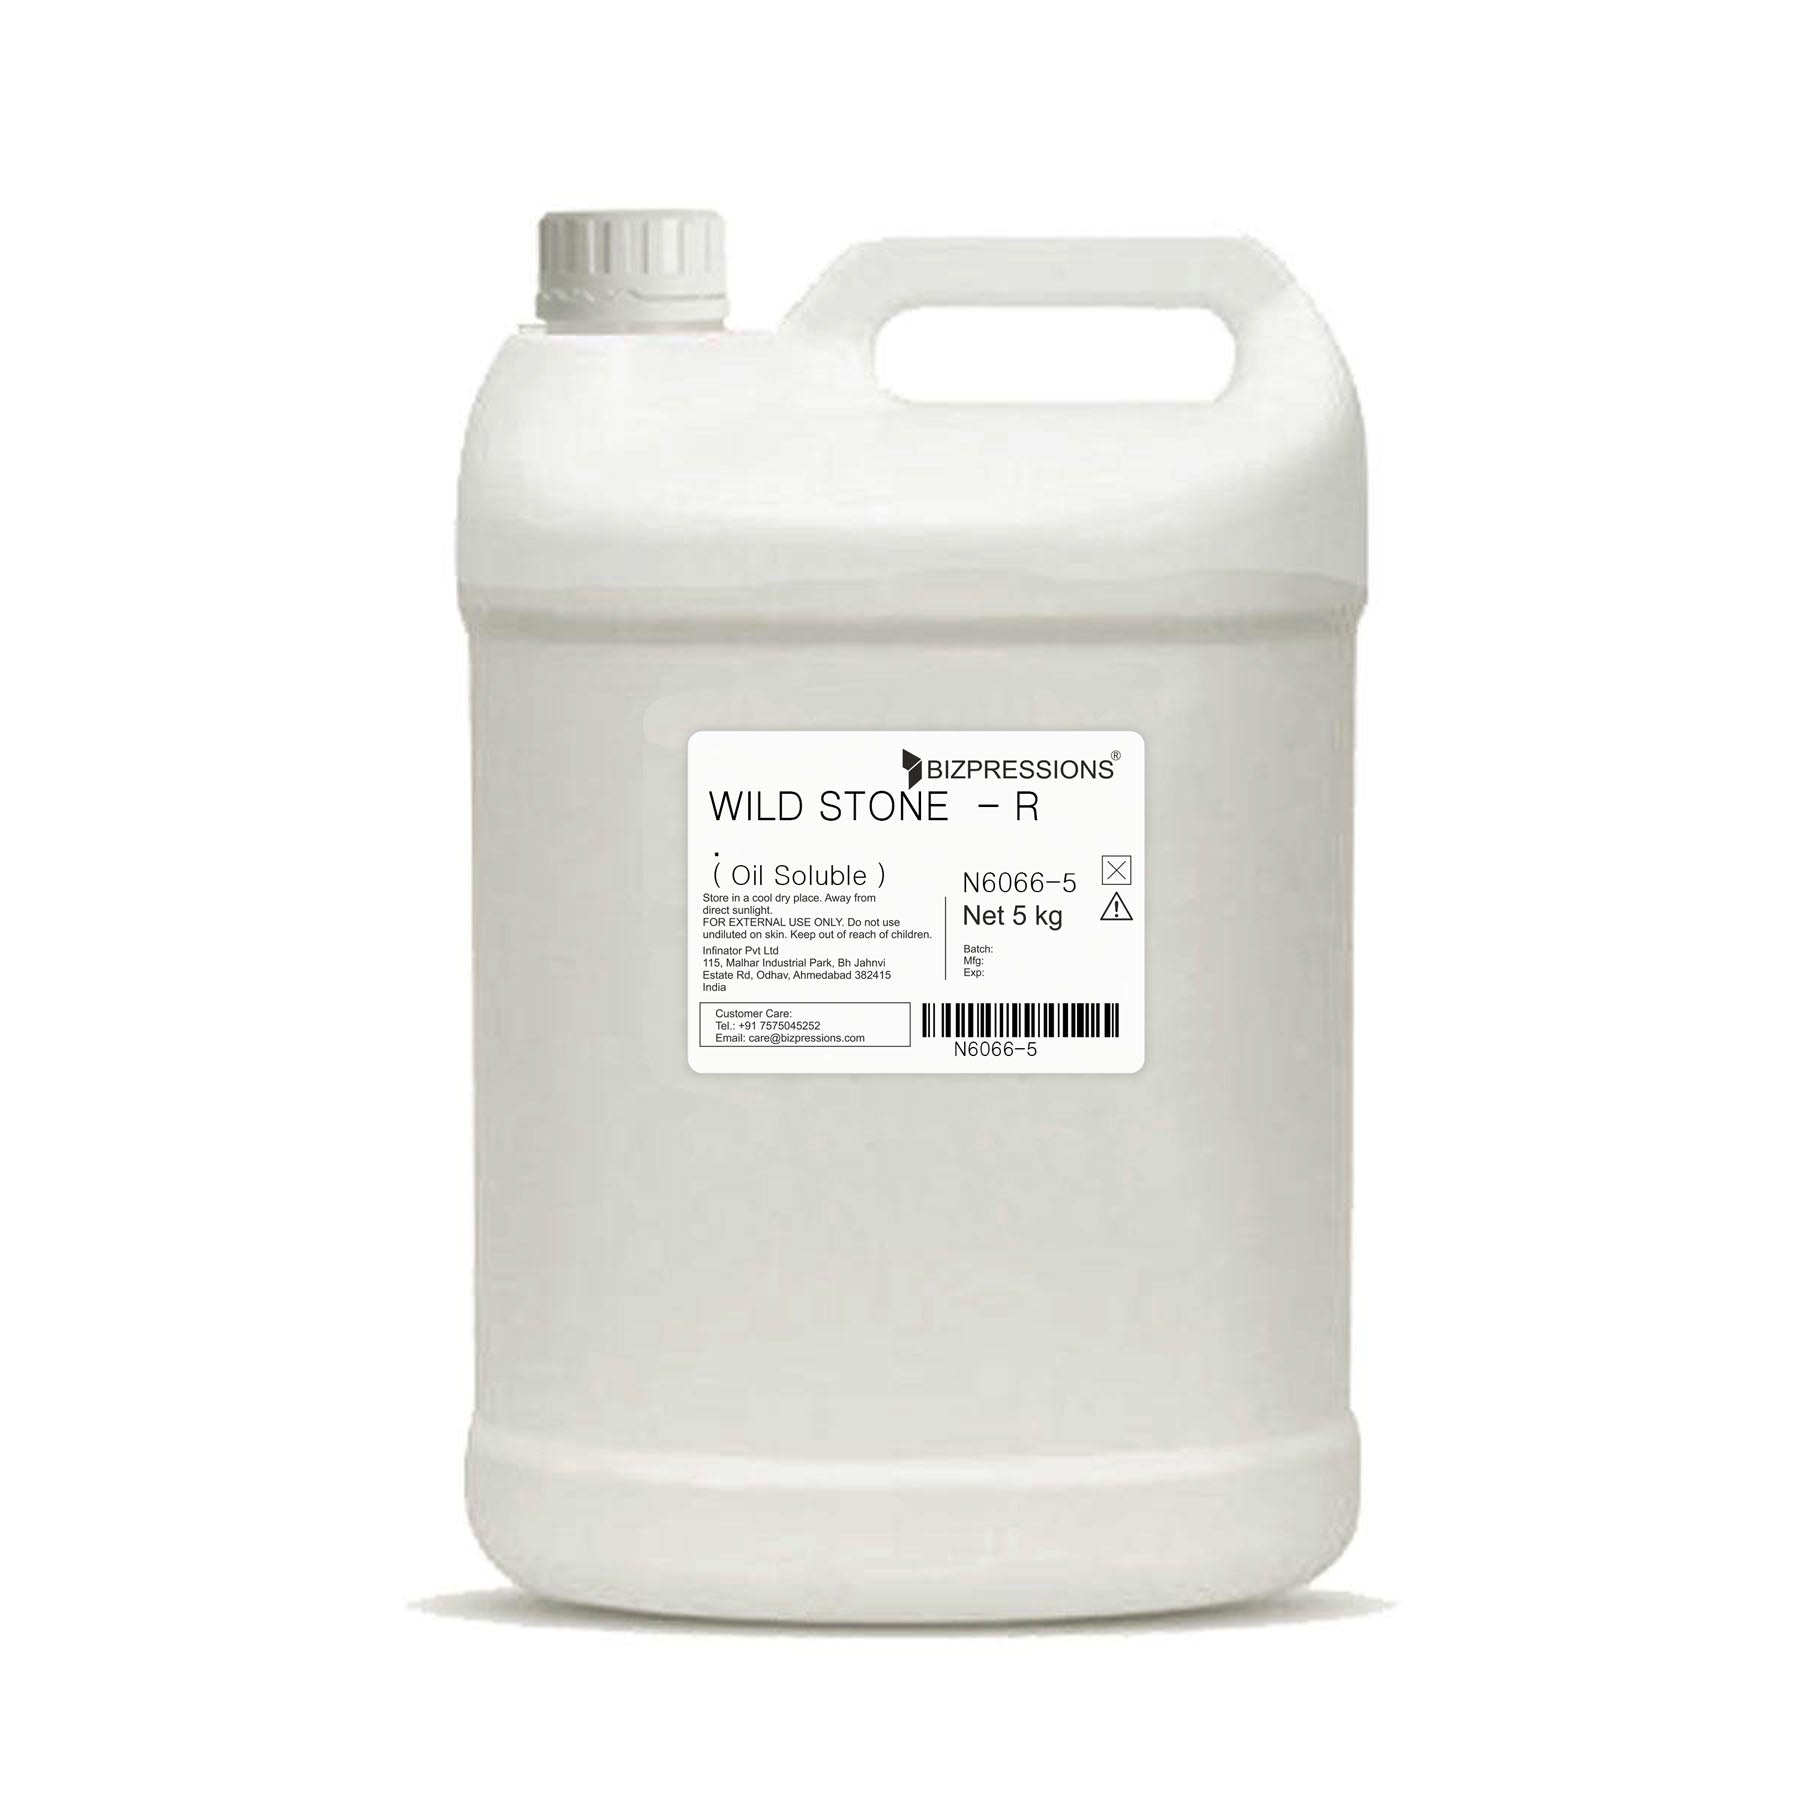 WILD STONE - R - Fragrance ( Oil Soluble ) - 5 kg